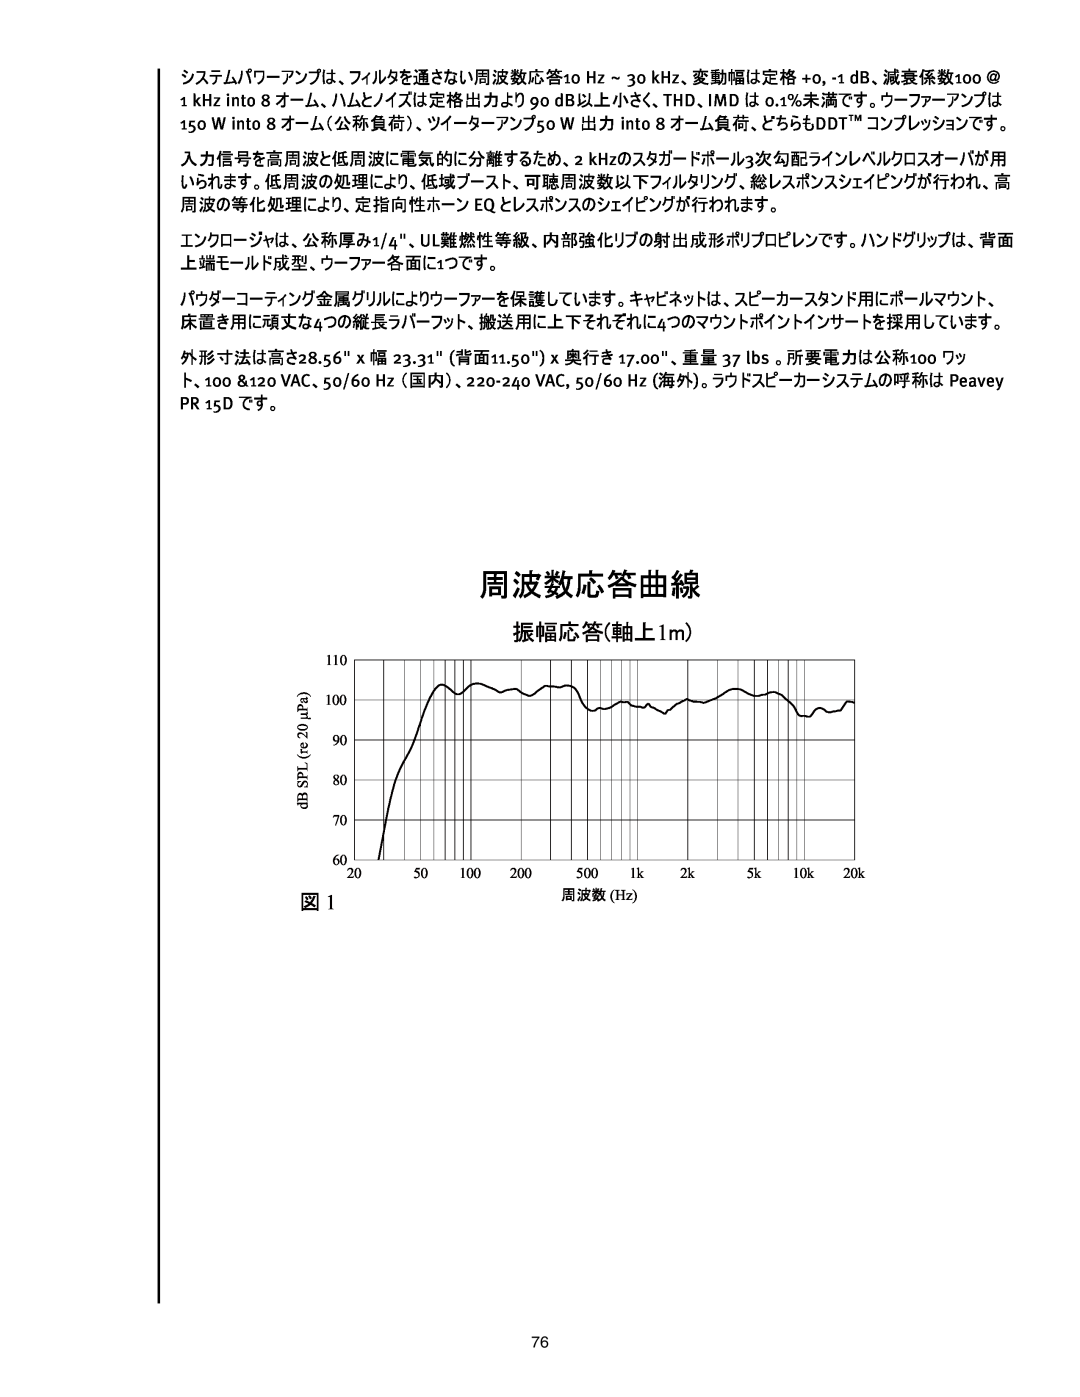 Peavey PR 15 D manual 周波数応答曲線 